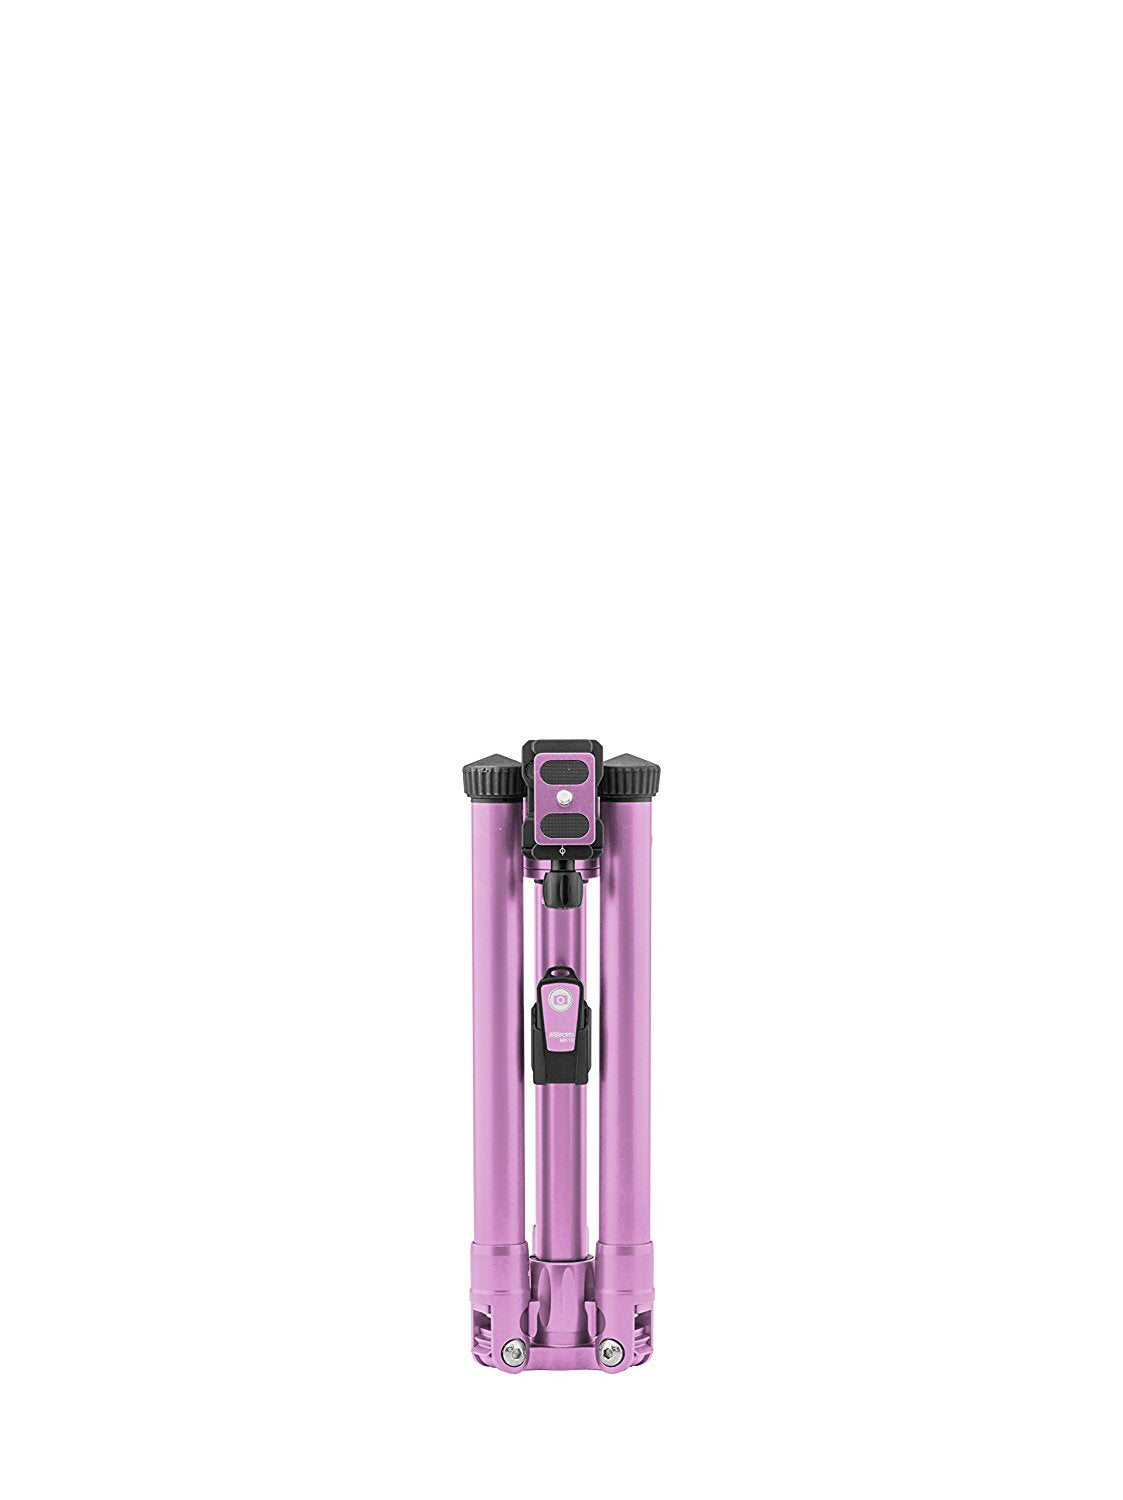 MeFOTO BackPacker Air Tripod and Selfie Stick in One Kit Purple